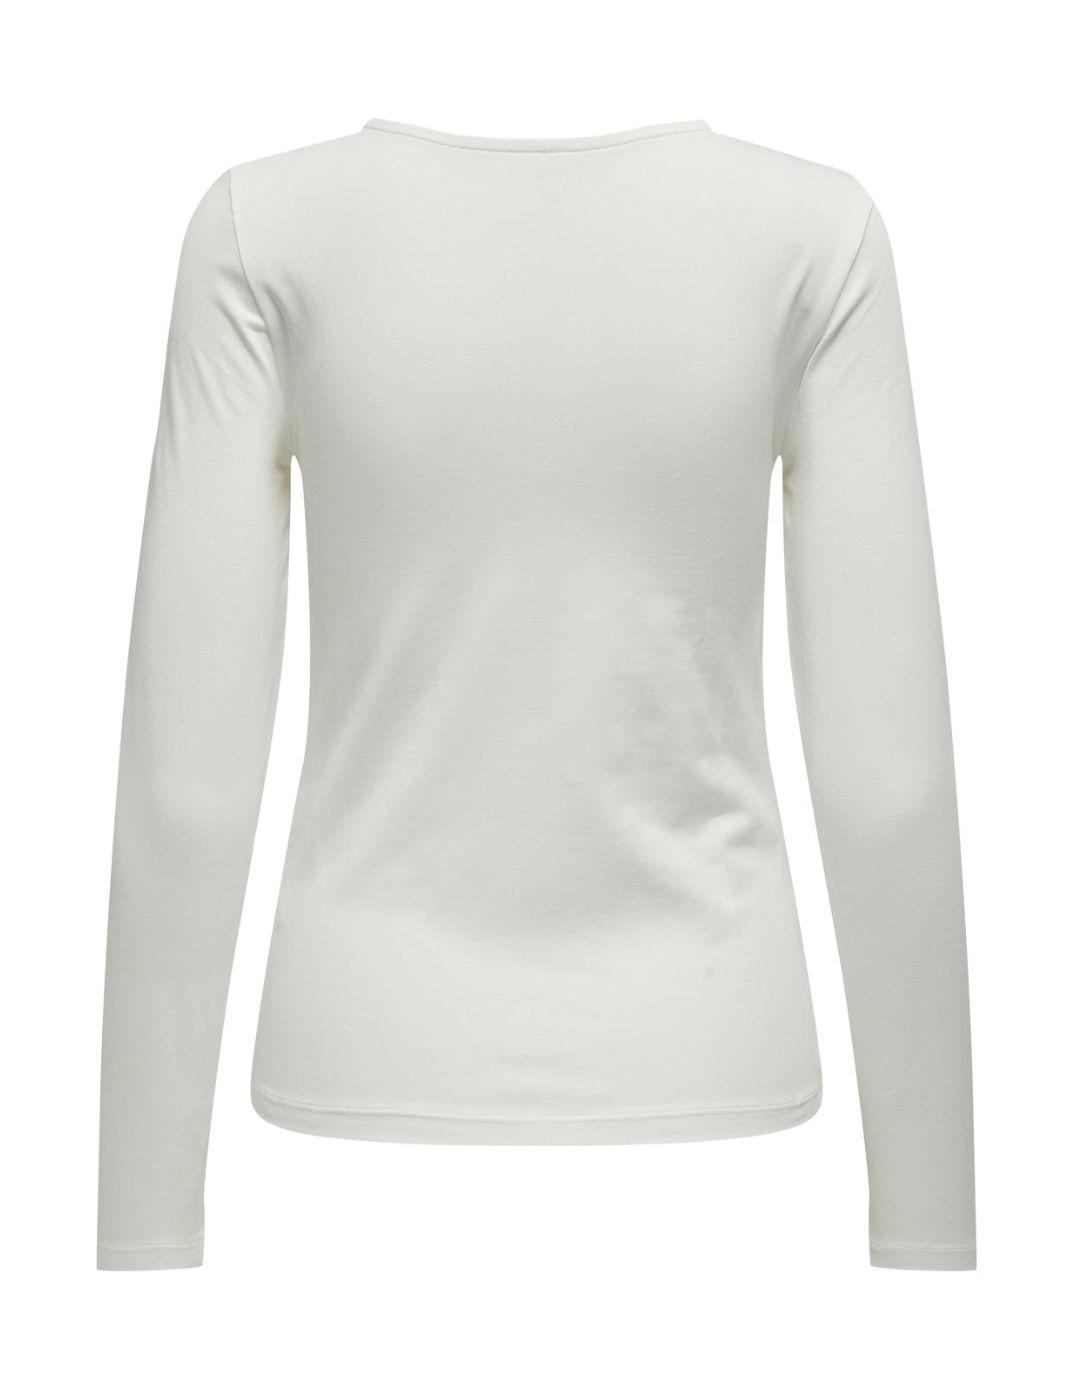 Camiseta Only Lopi blanca escote asimétrico para mujer